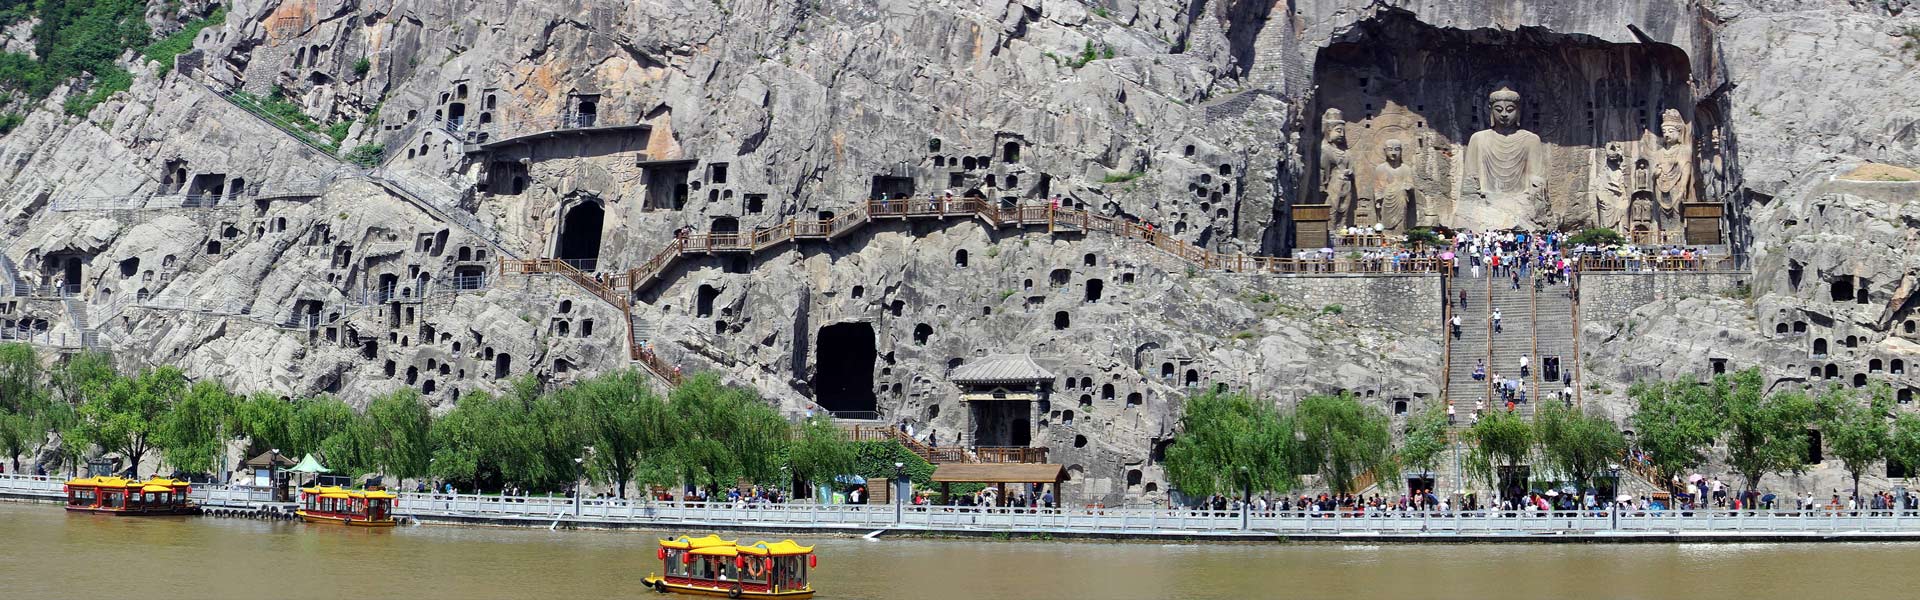 1 day tour: Longmen Grottoes&Shaolin Temple from Xian(by train)